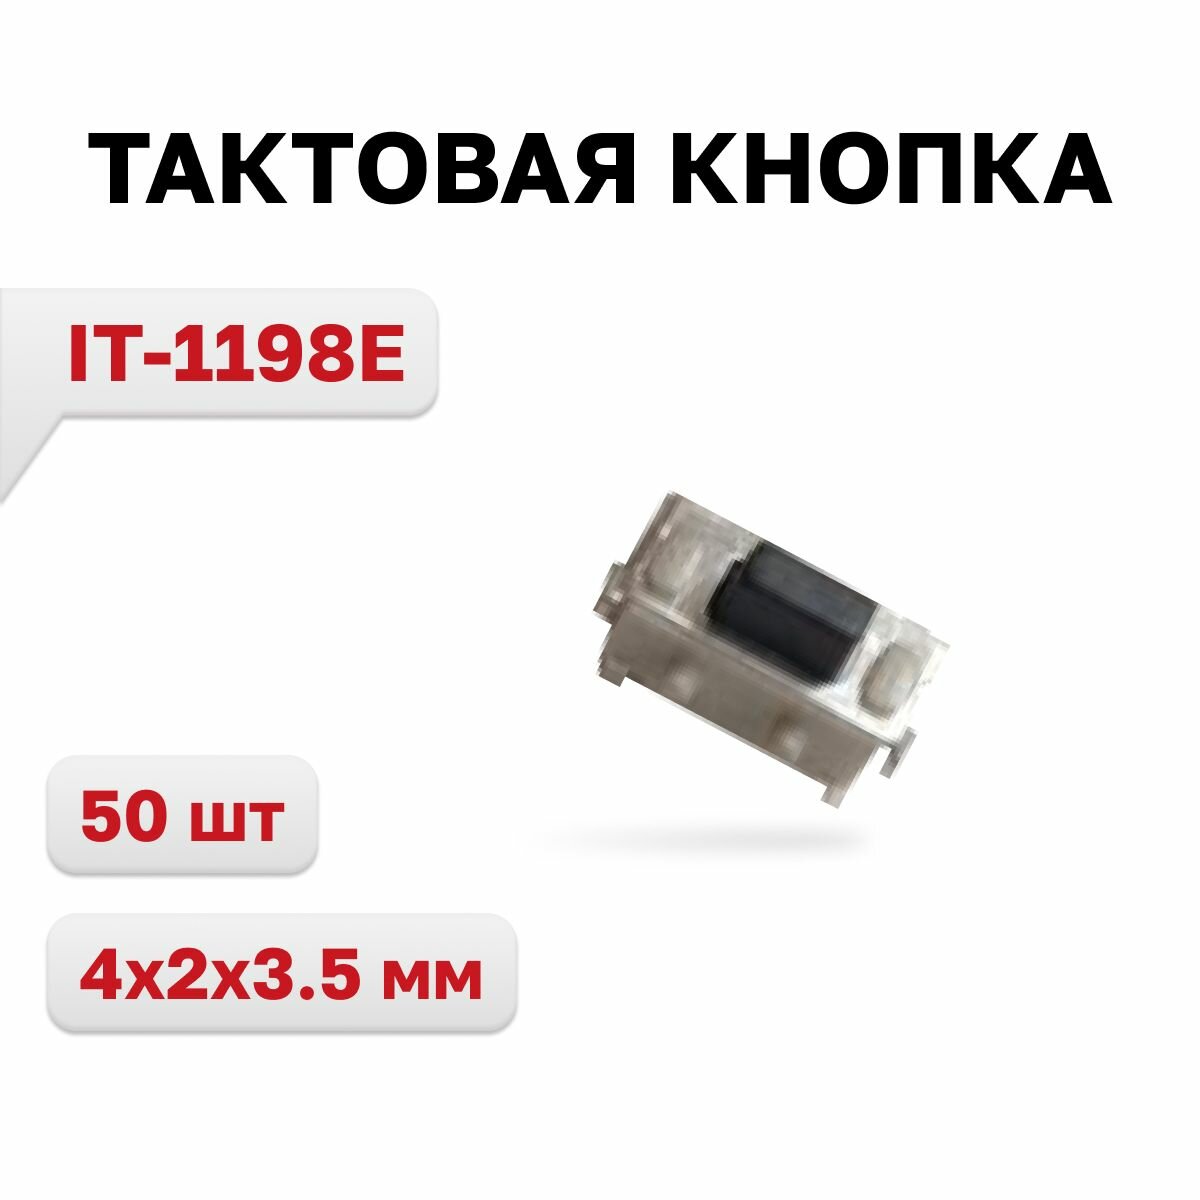 IT-1198E кнопка тактовая 4x2x3.5 мм 50 шт.